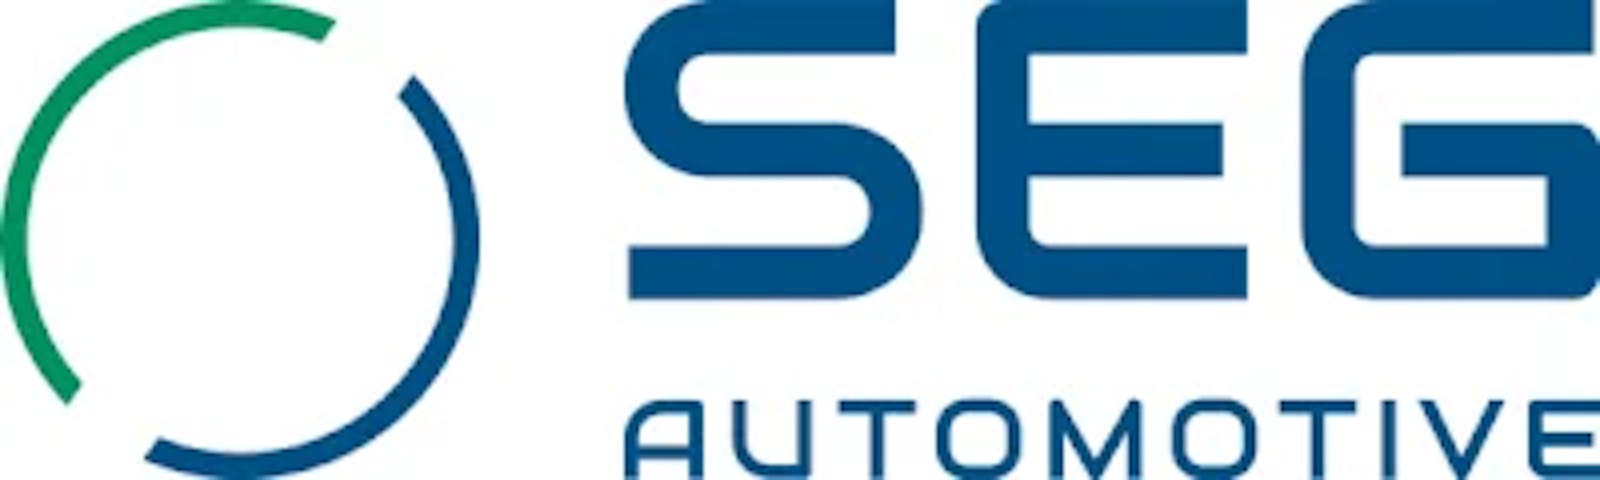 SEG Automotive